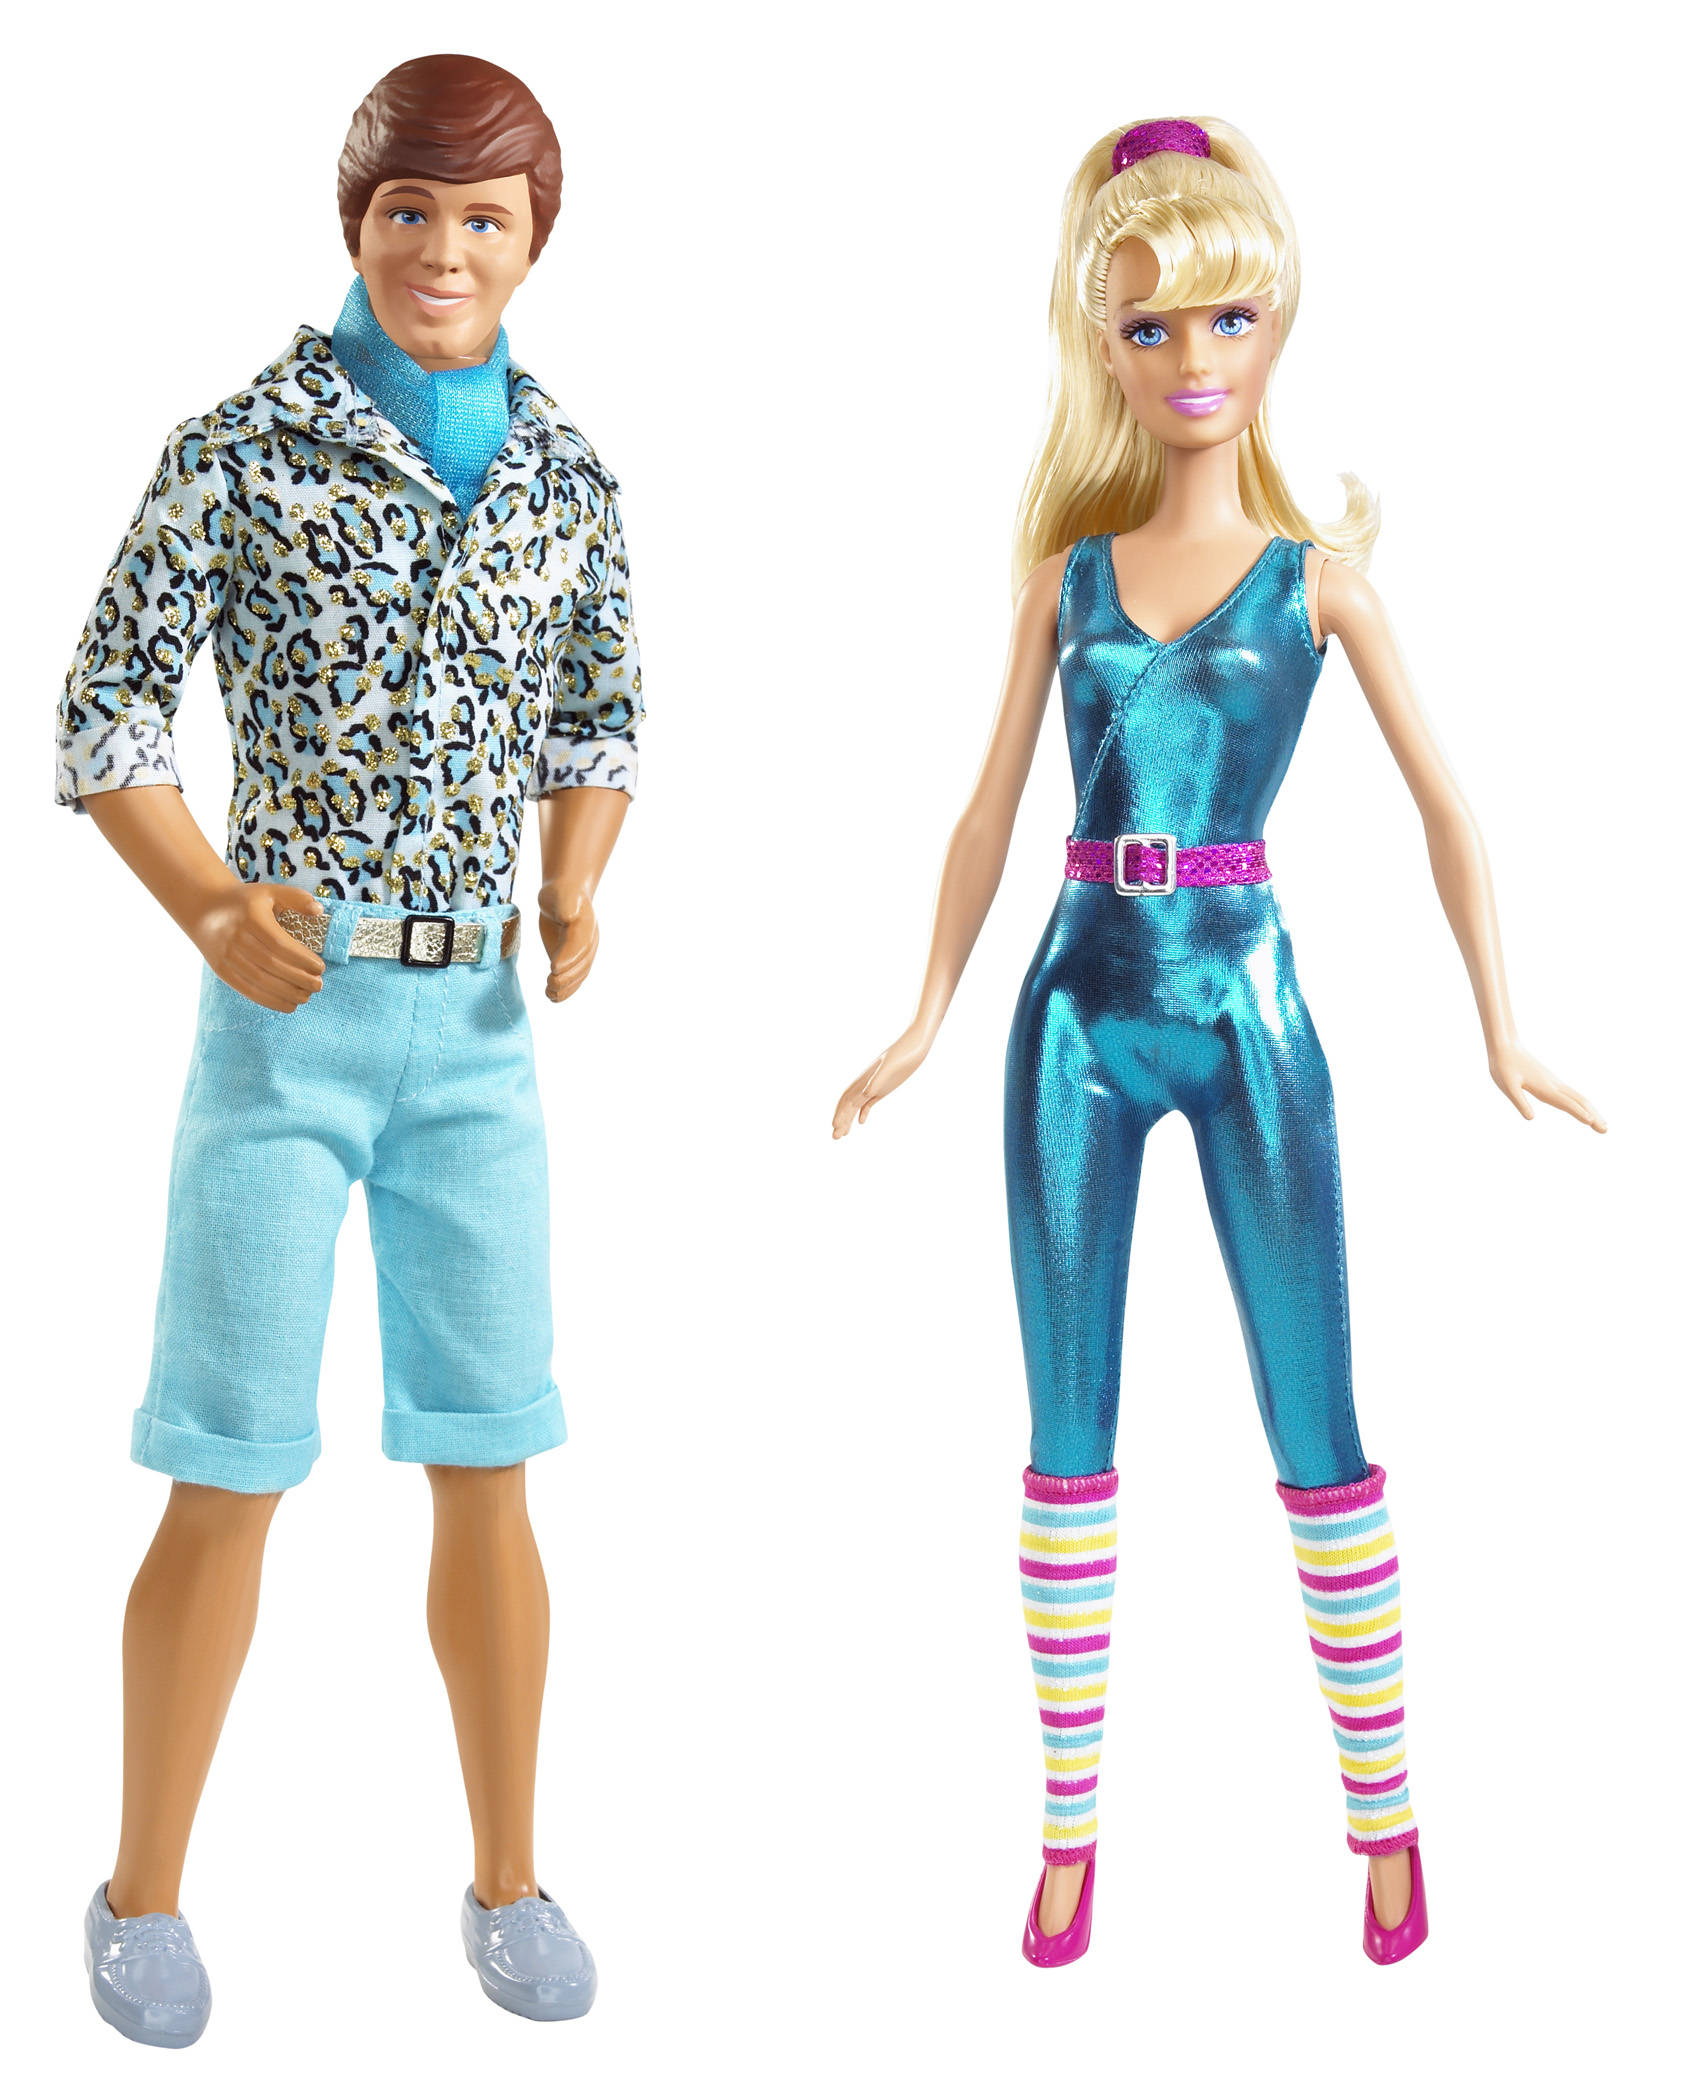 Original Barbie And Ken Hotsell, 55% OFF | www.gruposincom.es